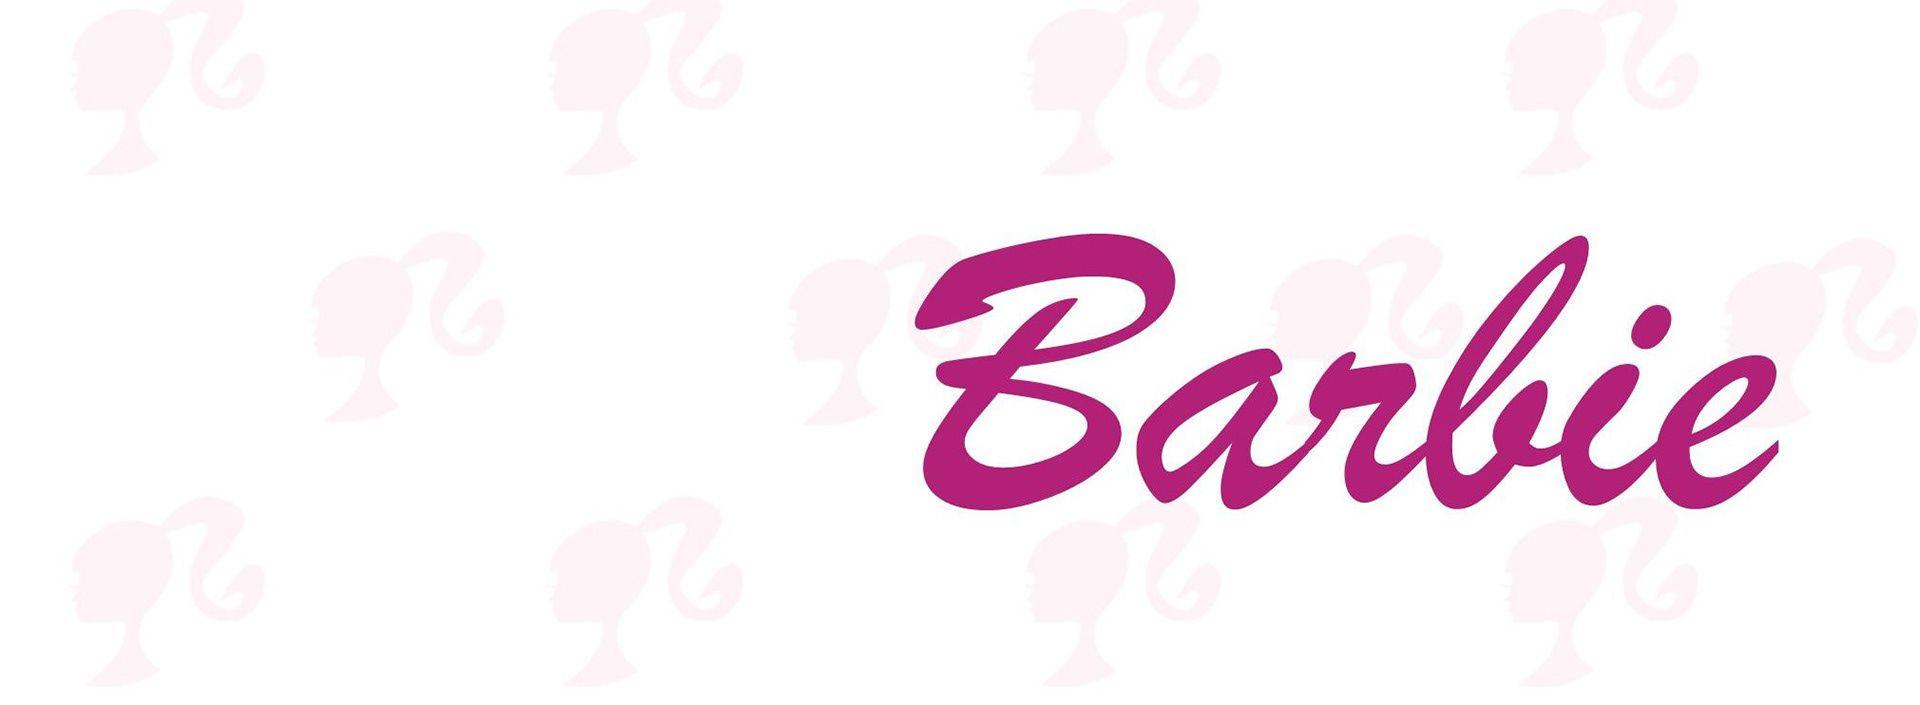 Barbie 2017 Logo - Keaton Tyler